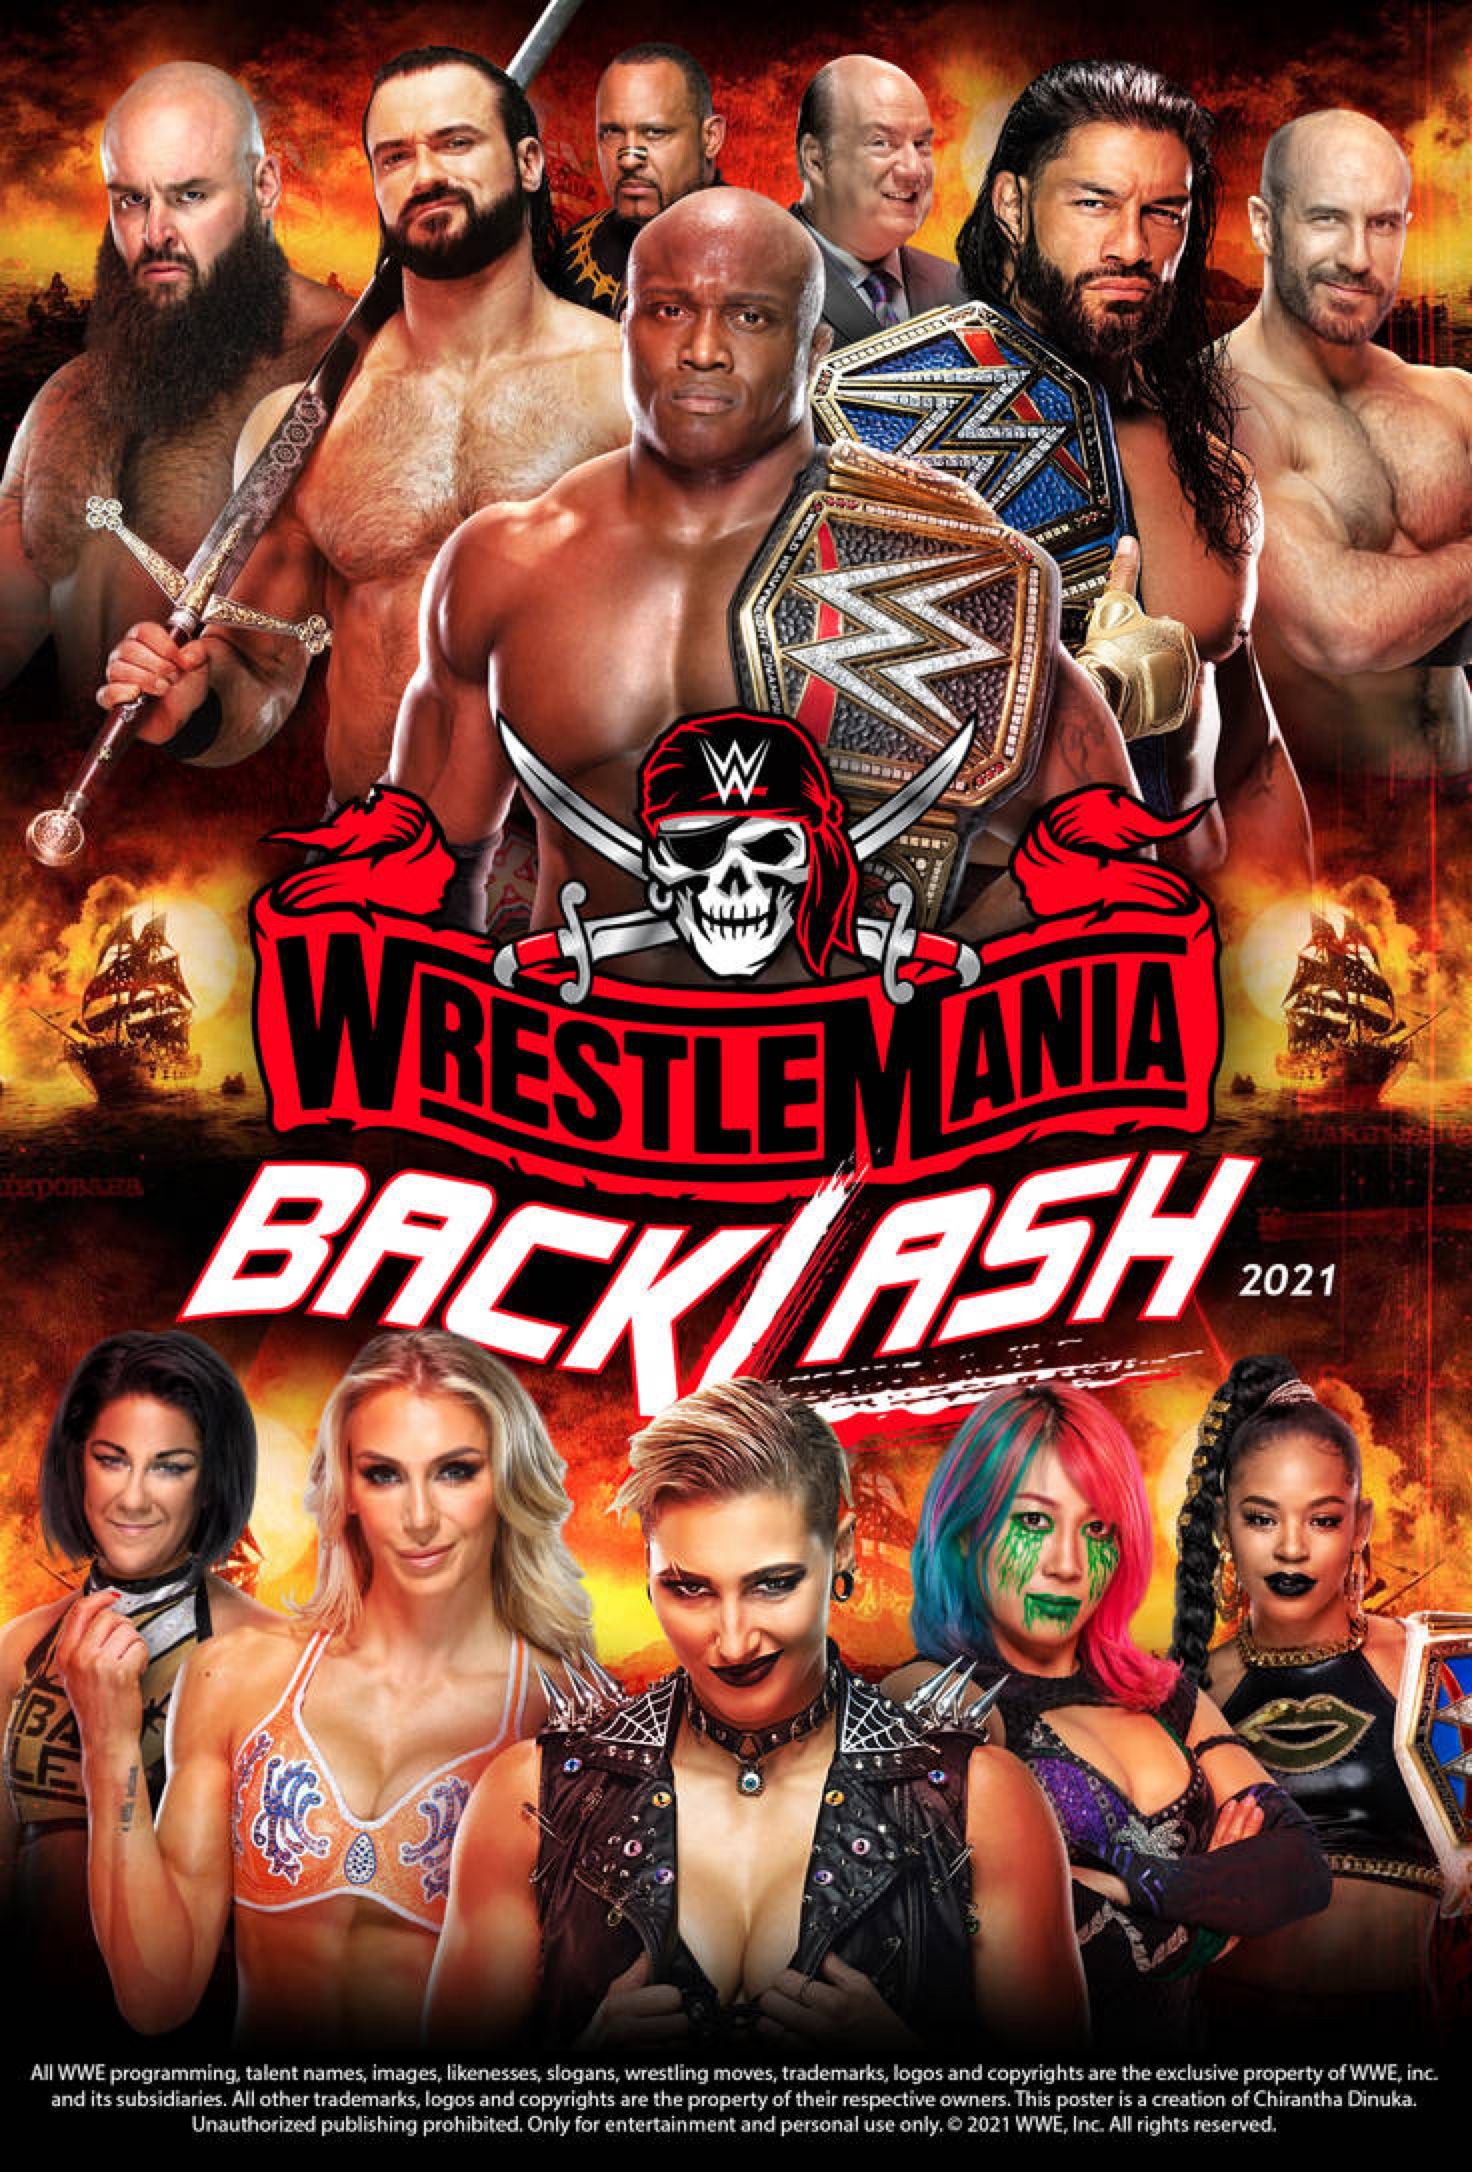 WWE WrestleMania Backlash 2021 Poster. Wwe, Wrestlemania, Wwe superstar roman reigns